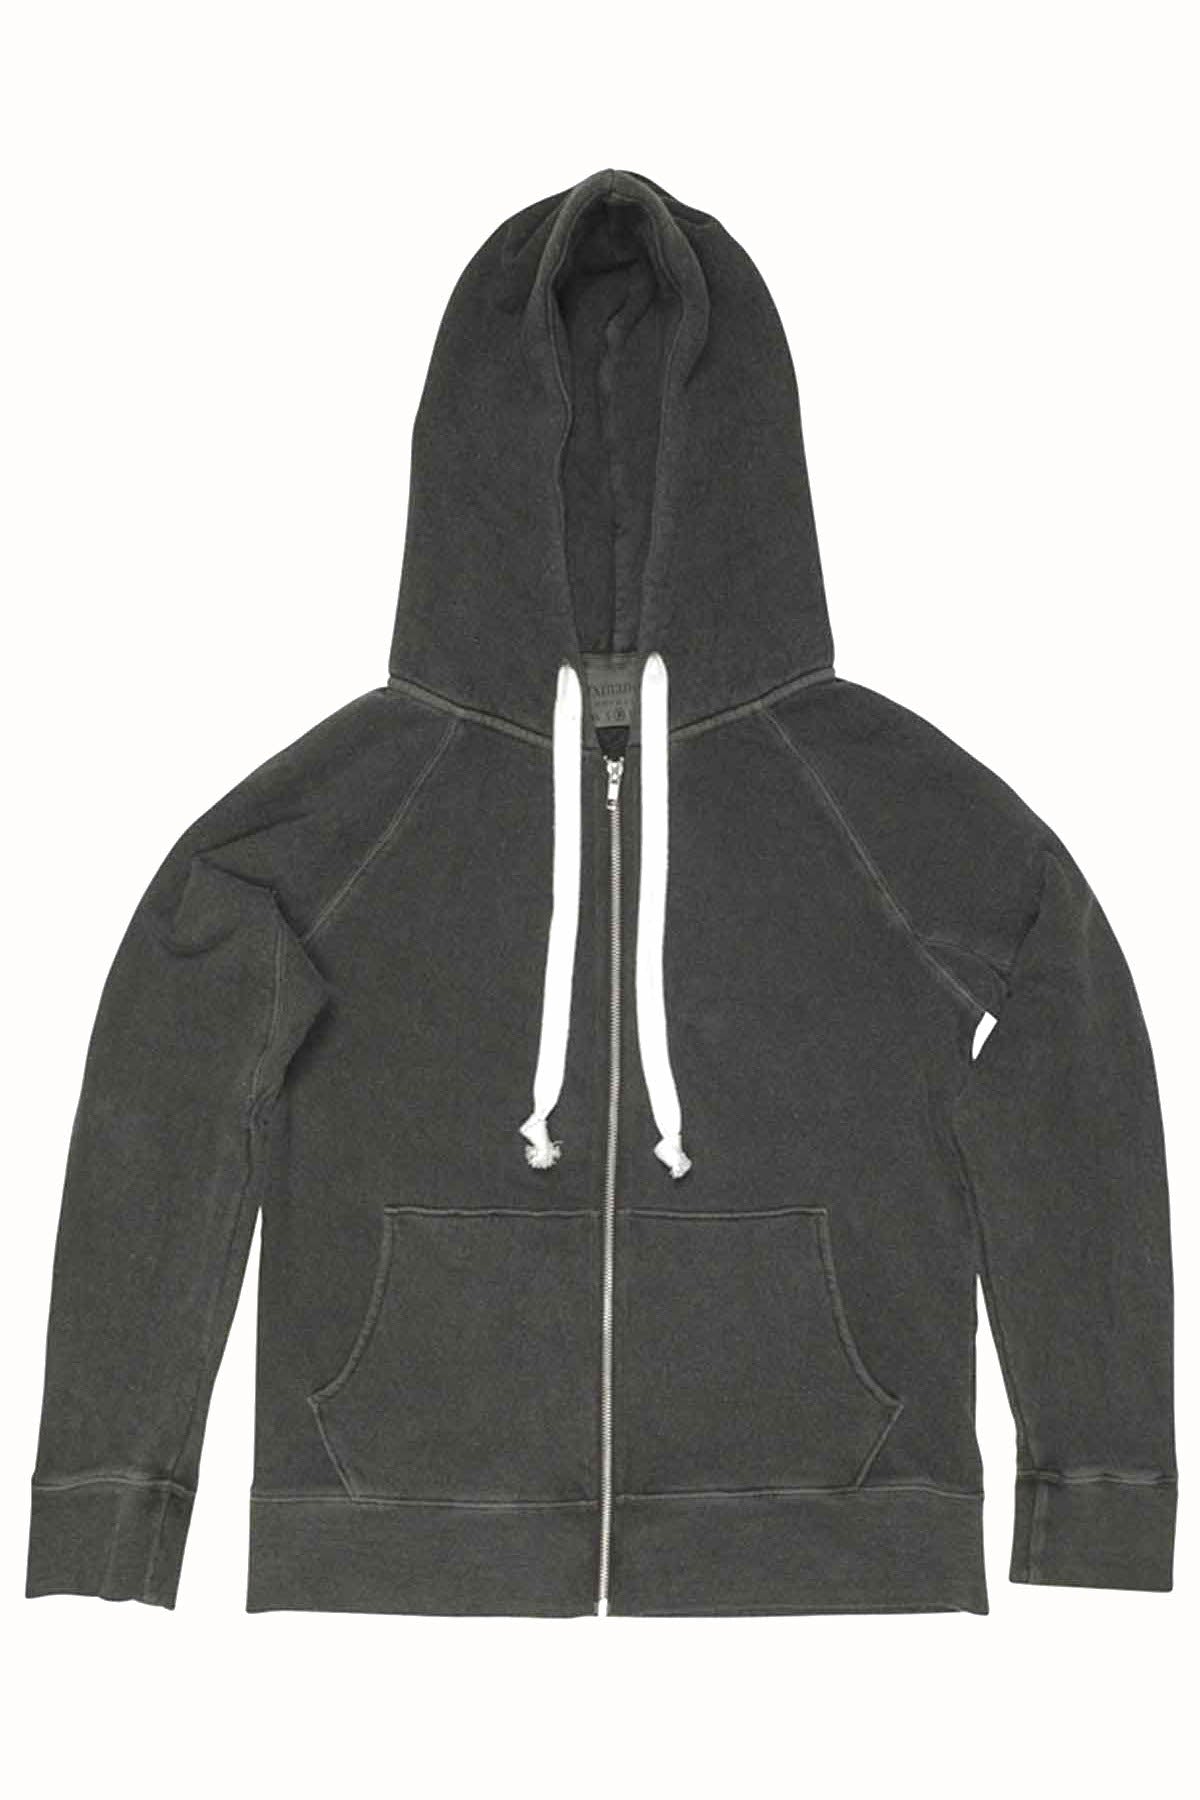 Rxmance Unisex Vintage Black Hooded Zip Sweatshirt